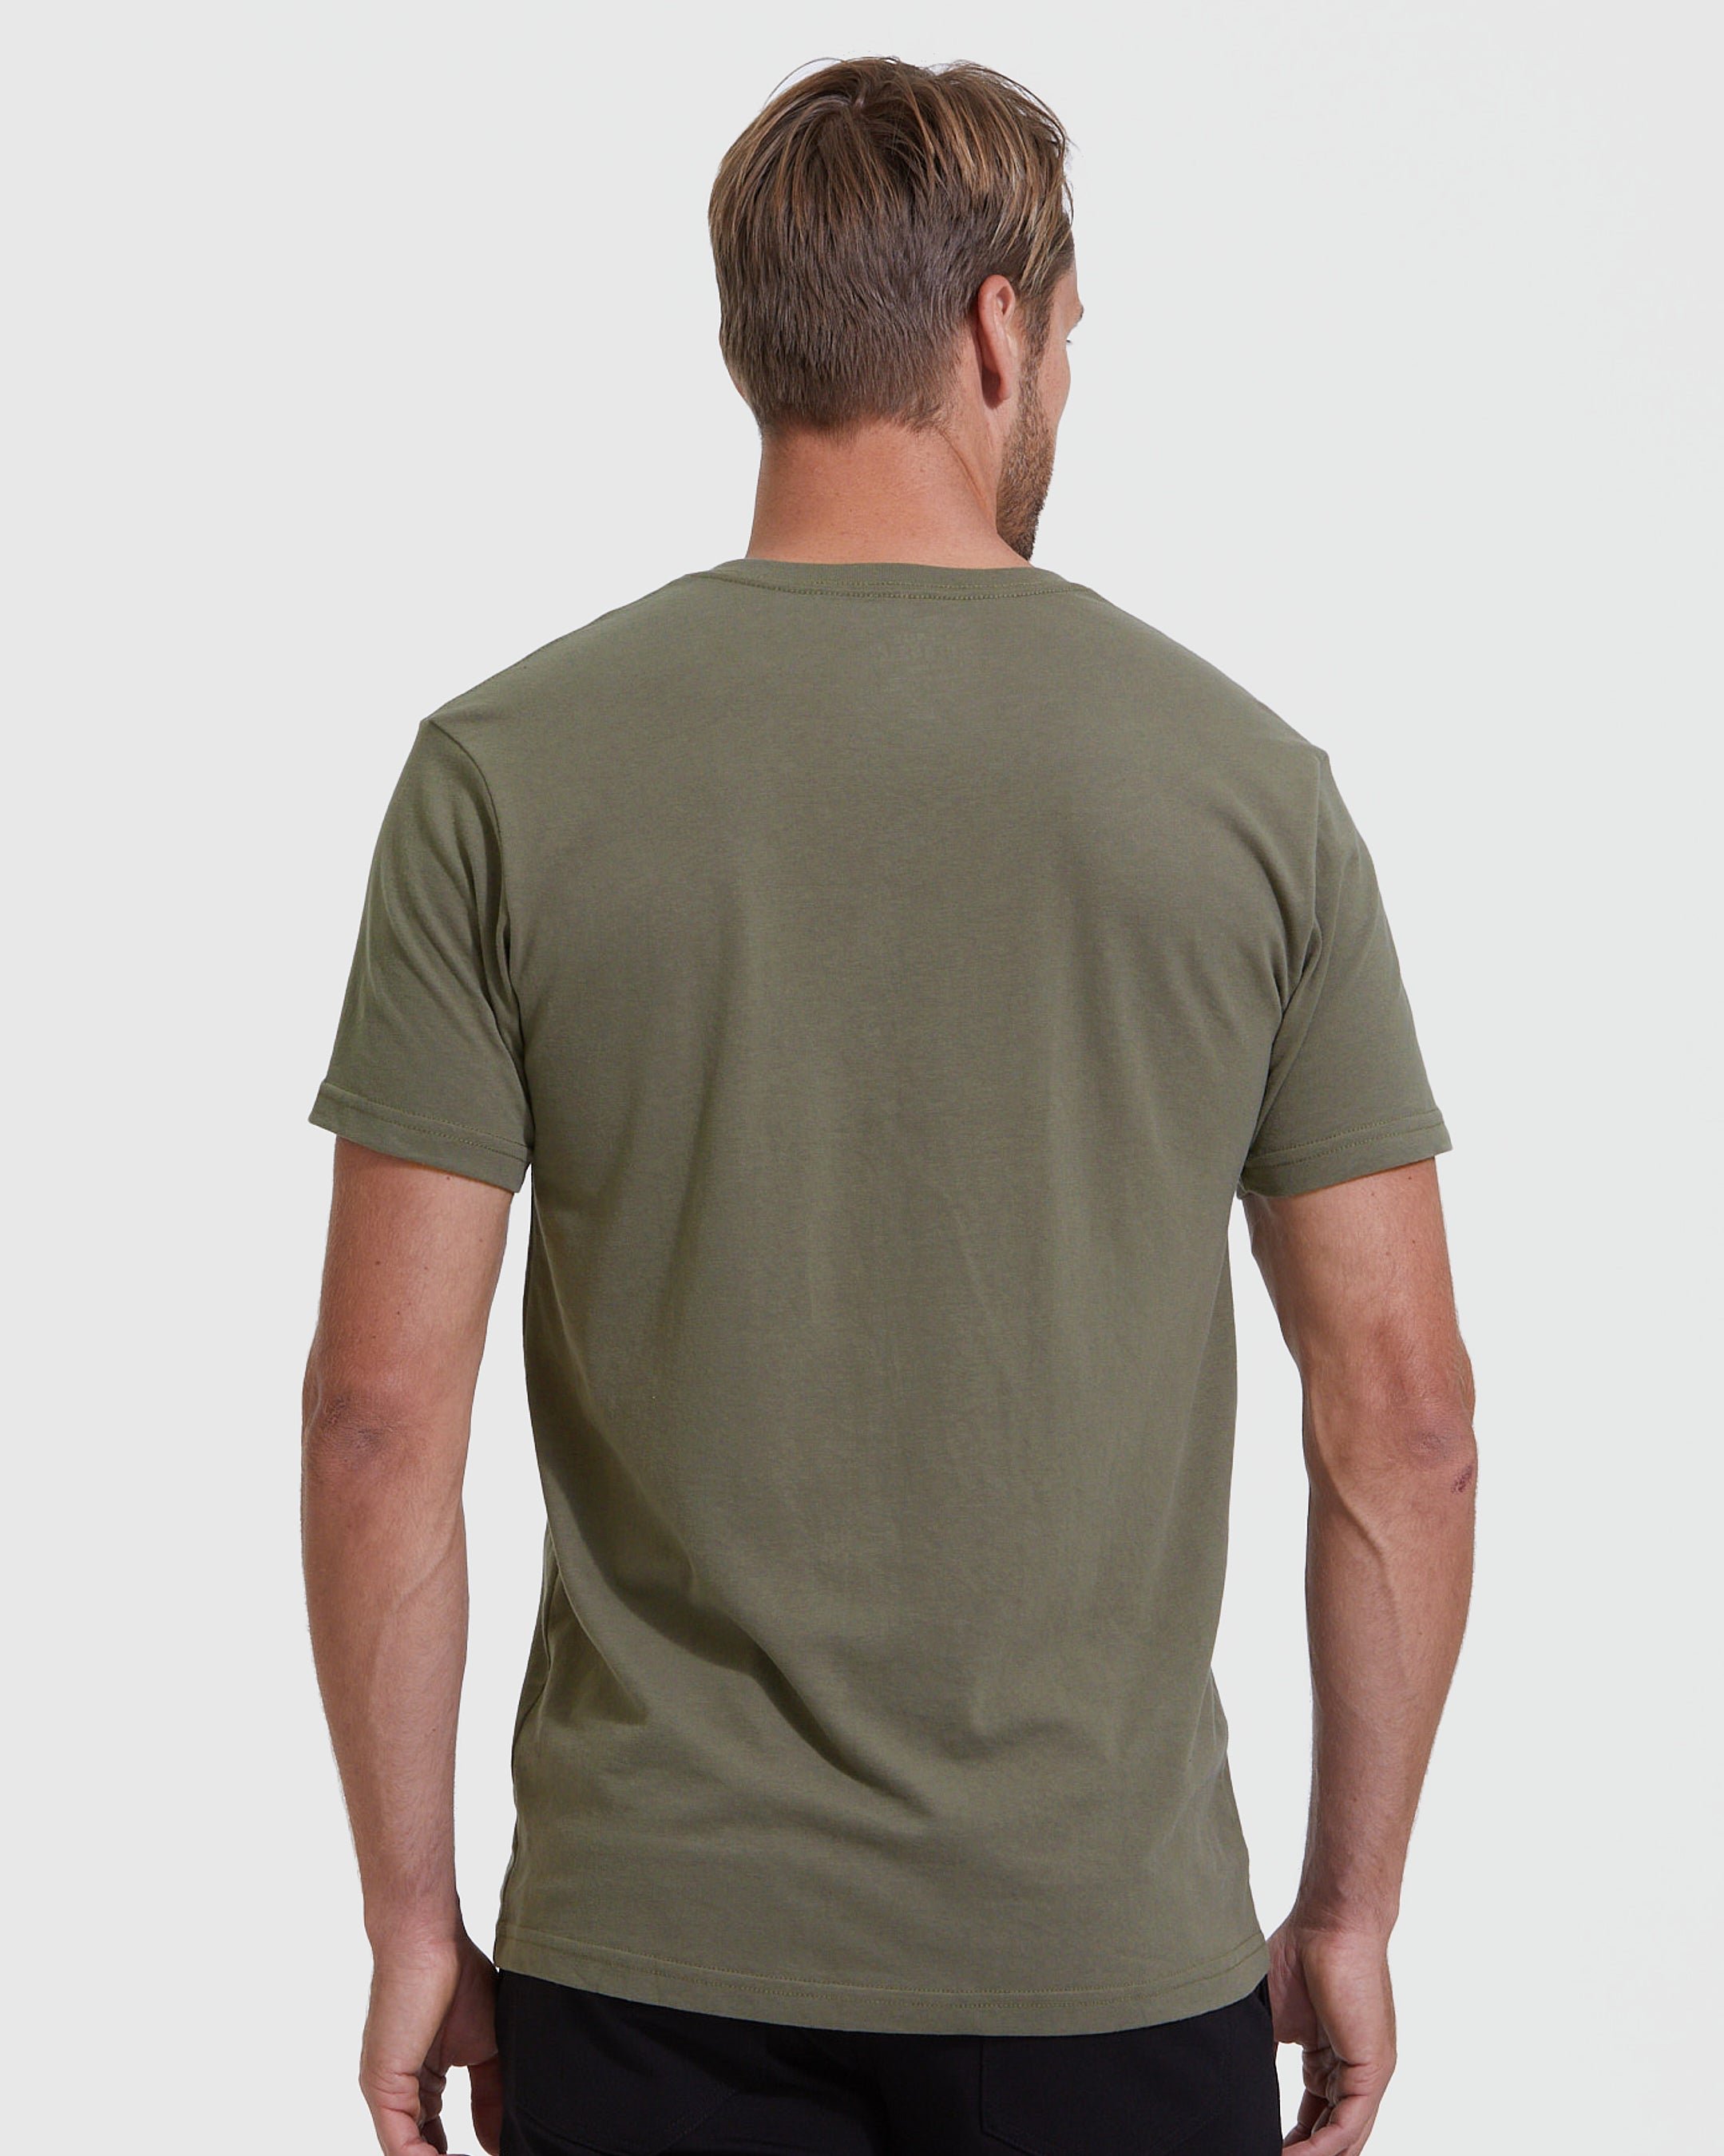 Military Green V-Neck T-Shirt